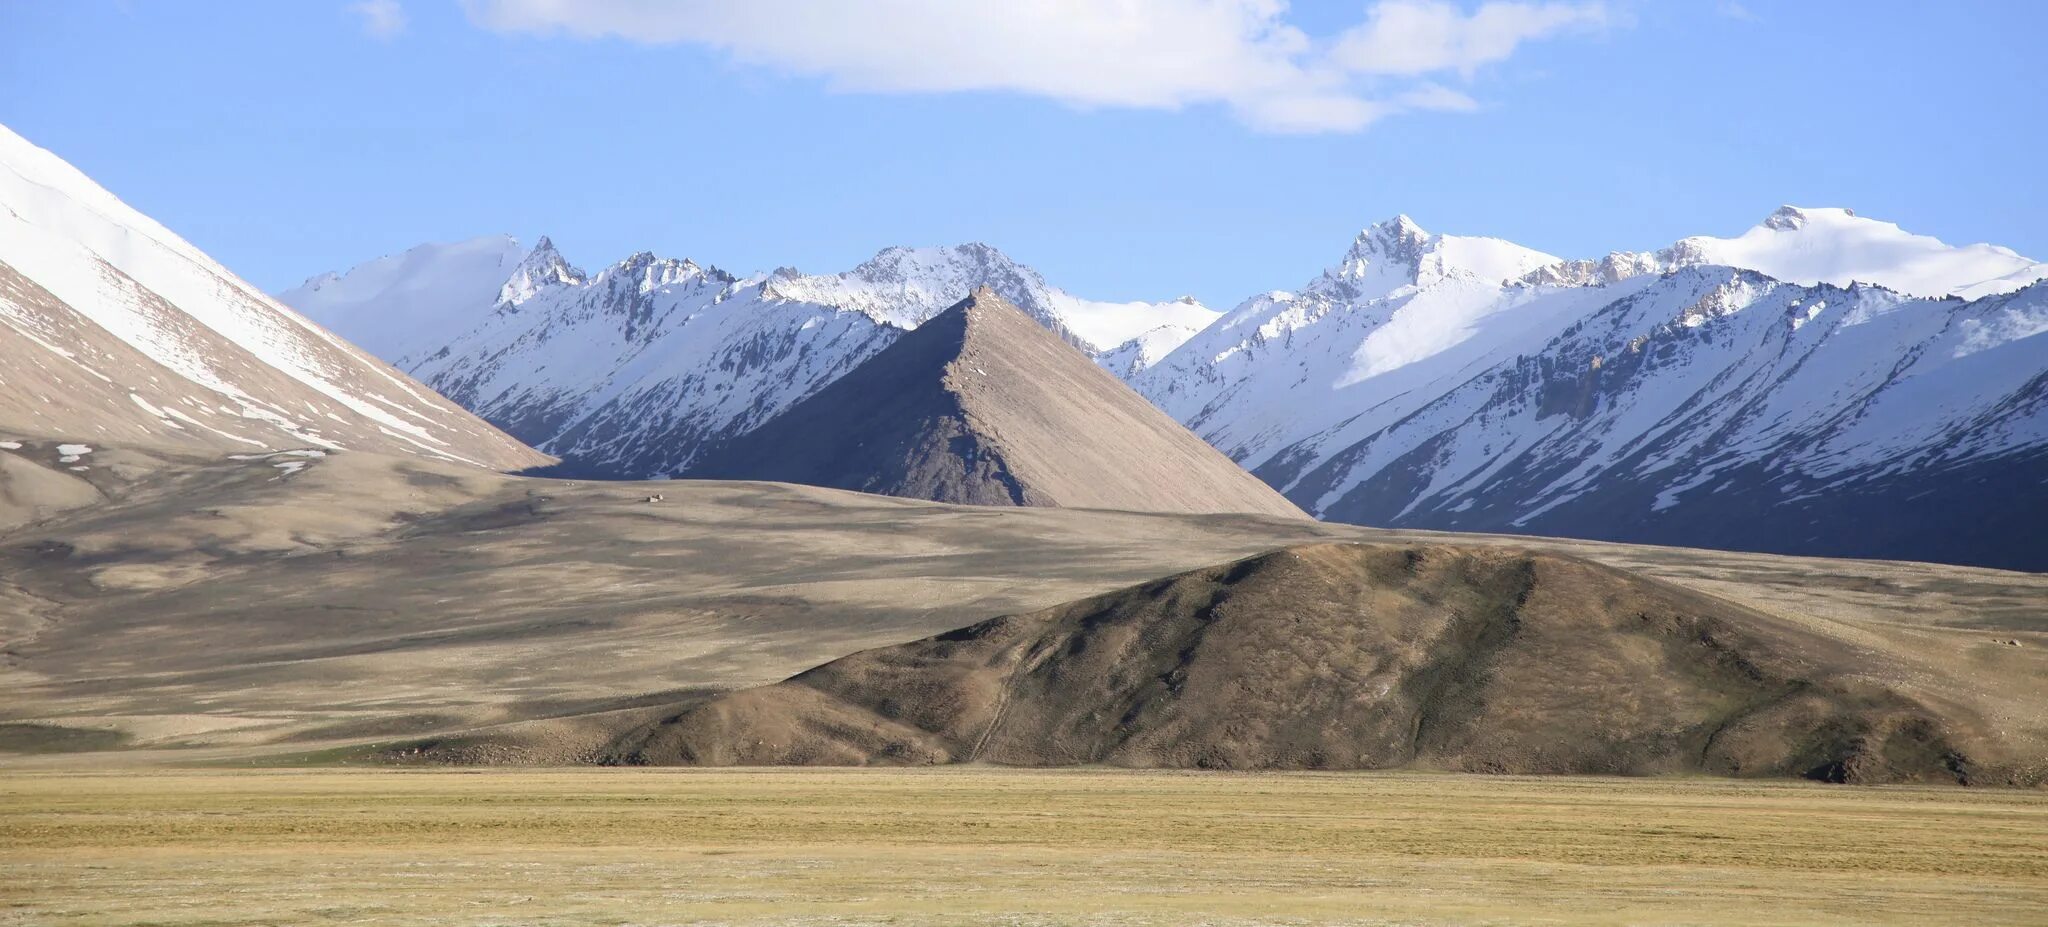 Grand pamir. Памир Таджикистан. Южный Памир. Гора Памир в Андижане. Горы Памир панорама.